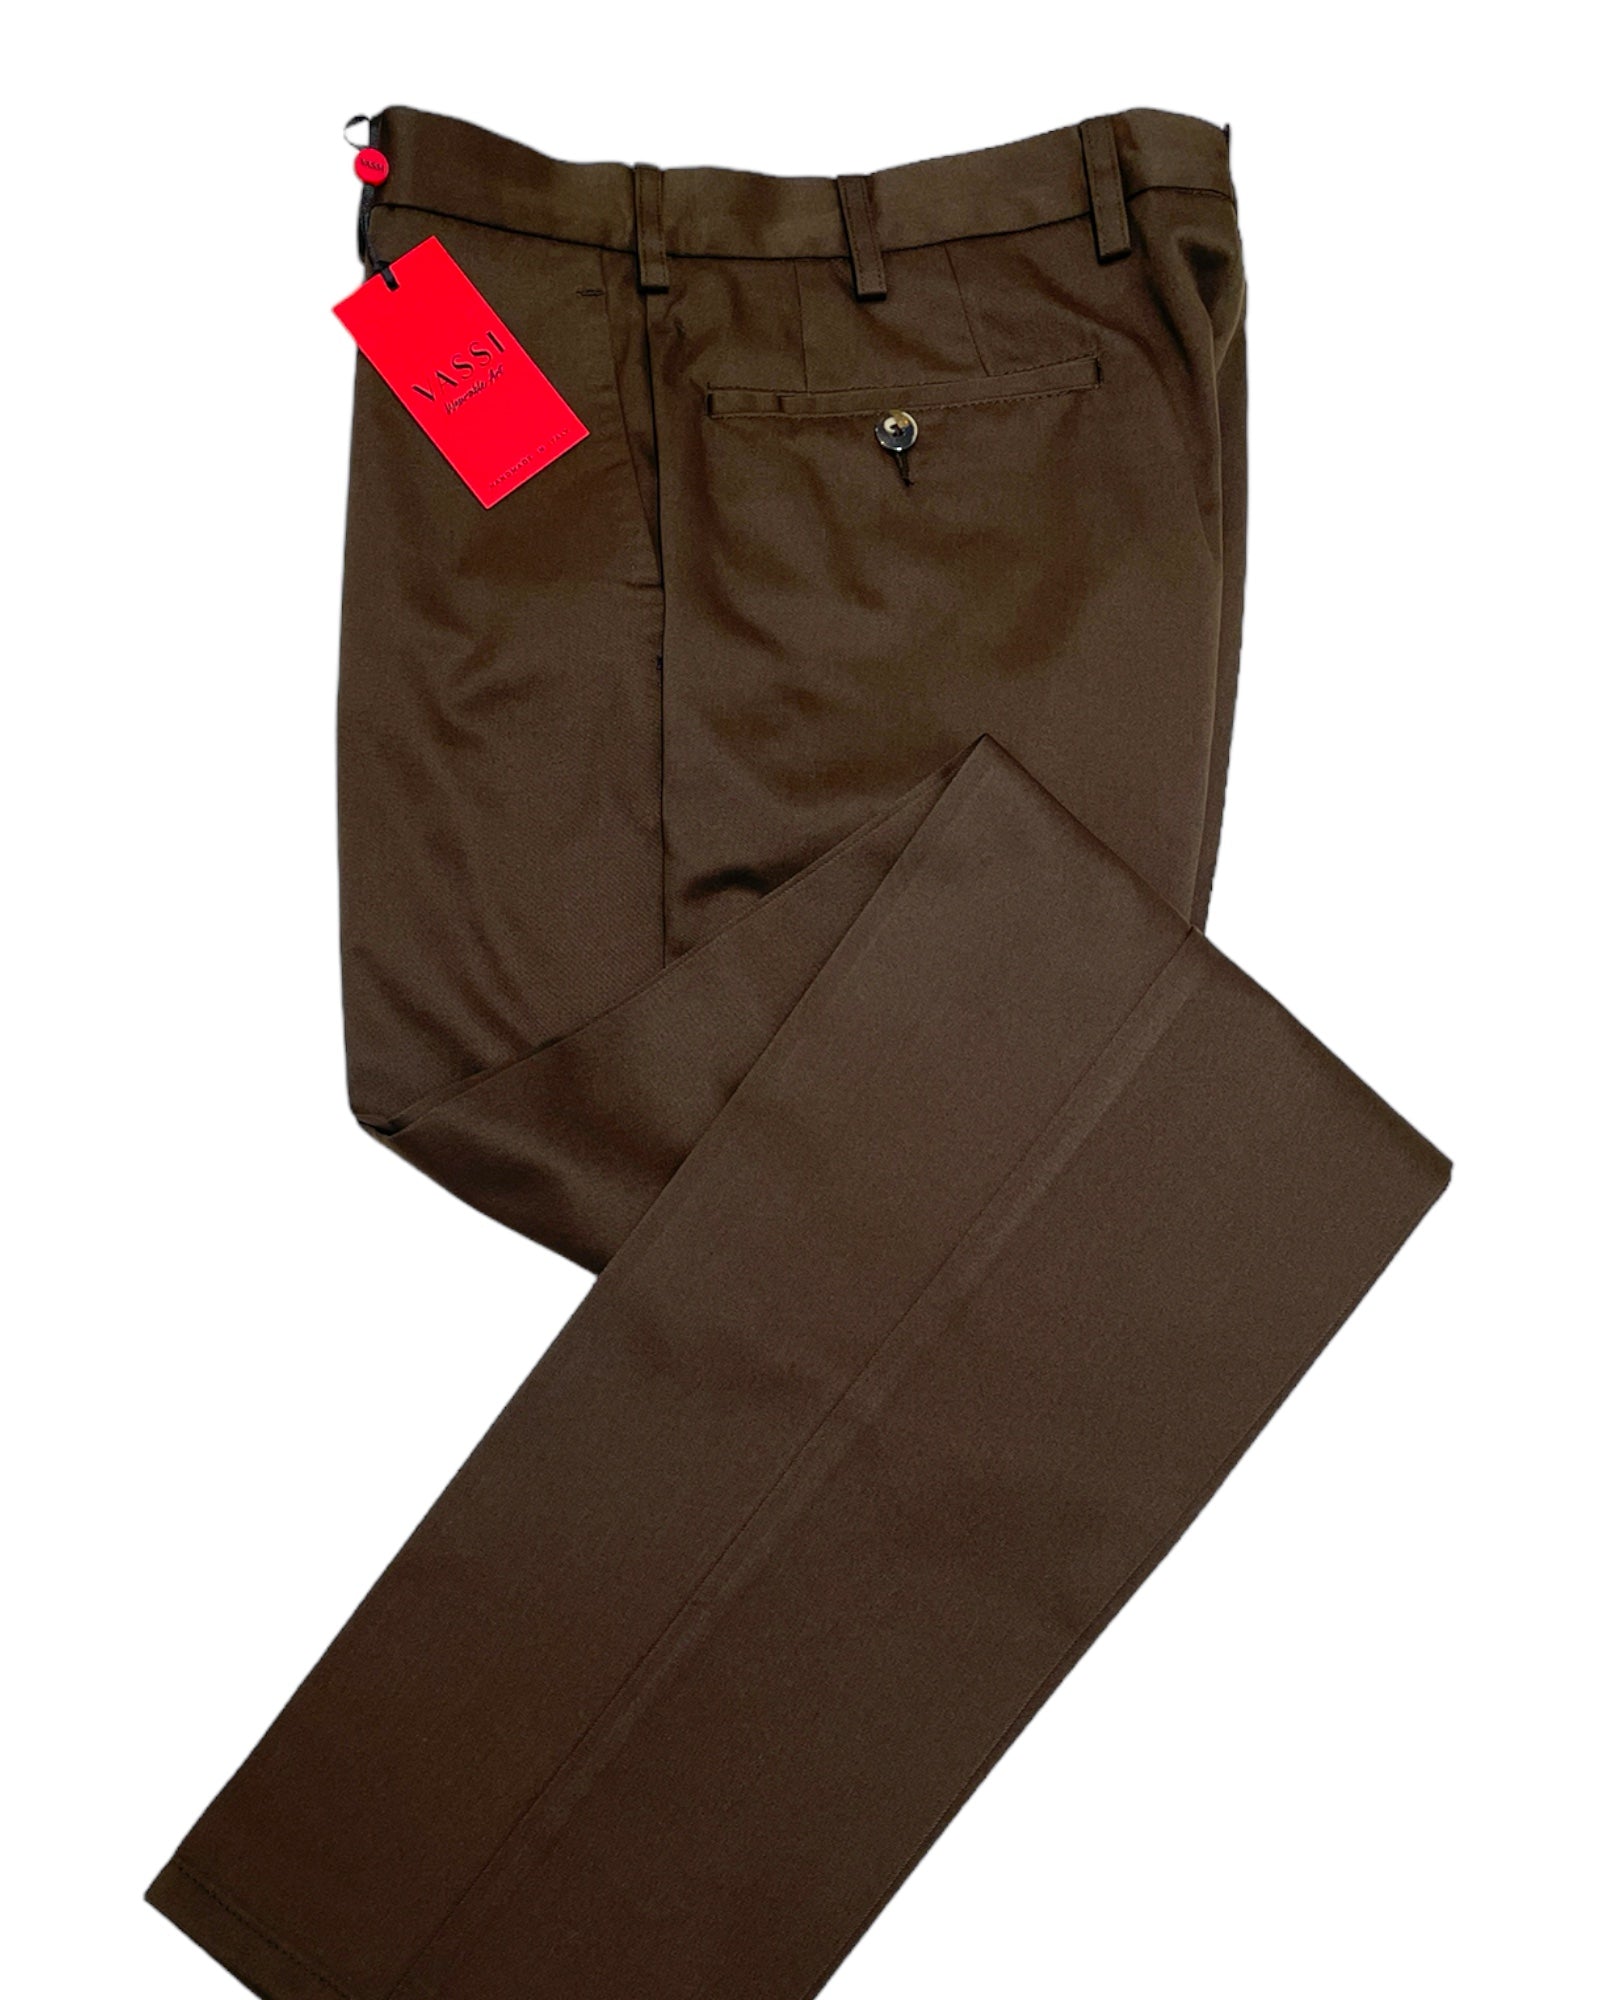 VASSI Flat Front Sartorial Cotton Trousers - Dark Chocolate CASUAL PANTS48 EU